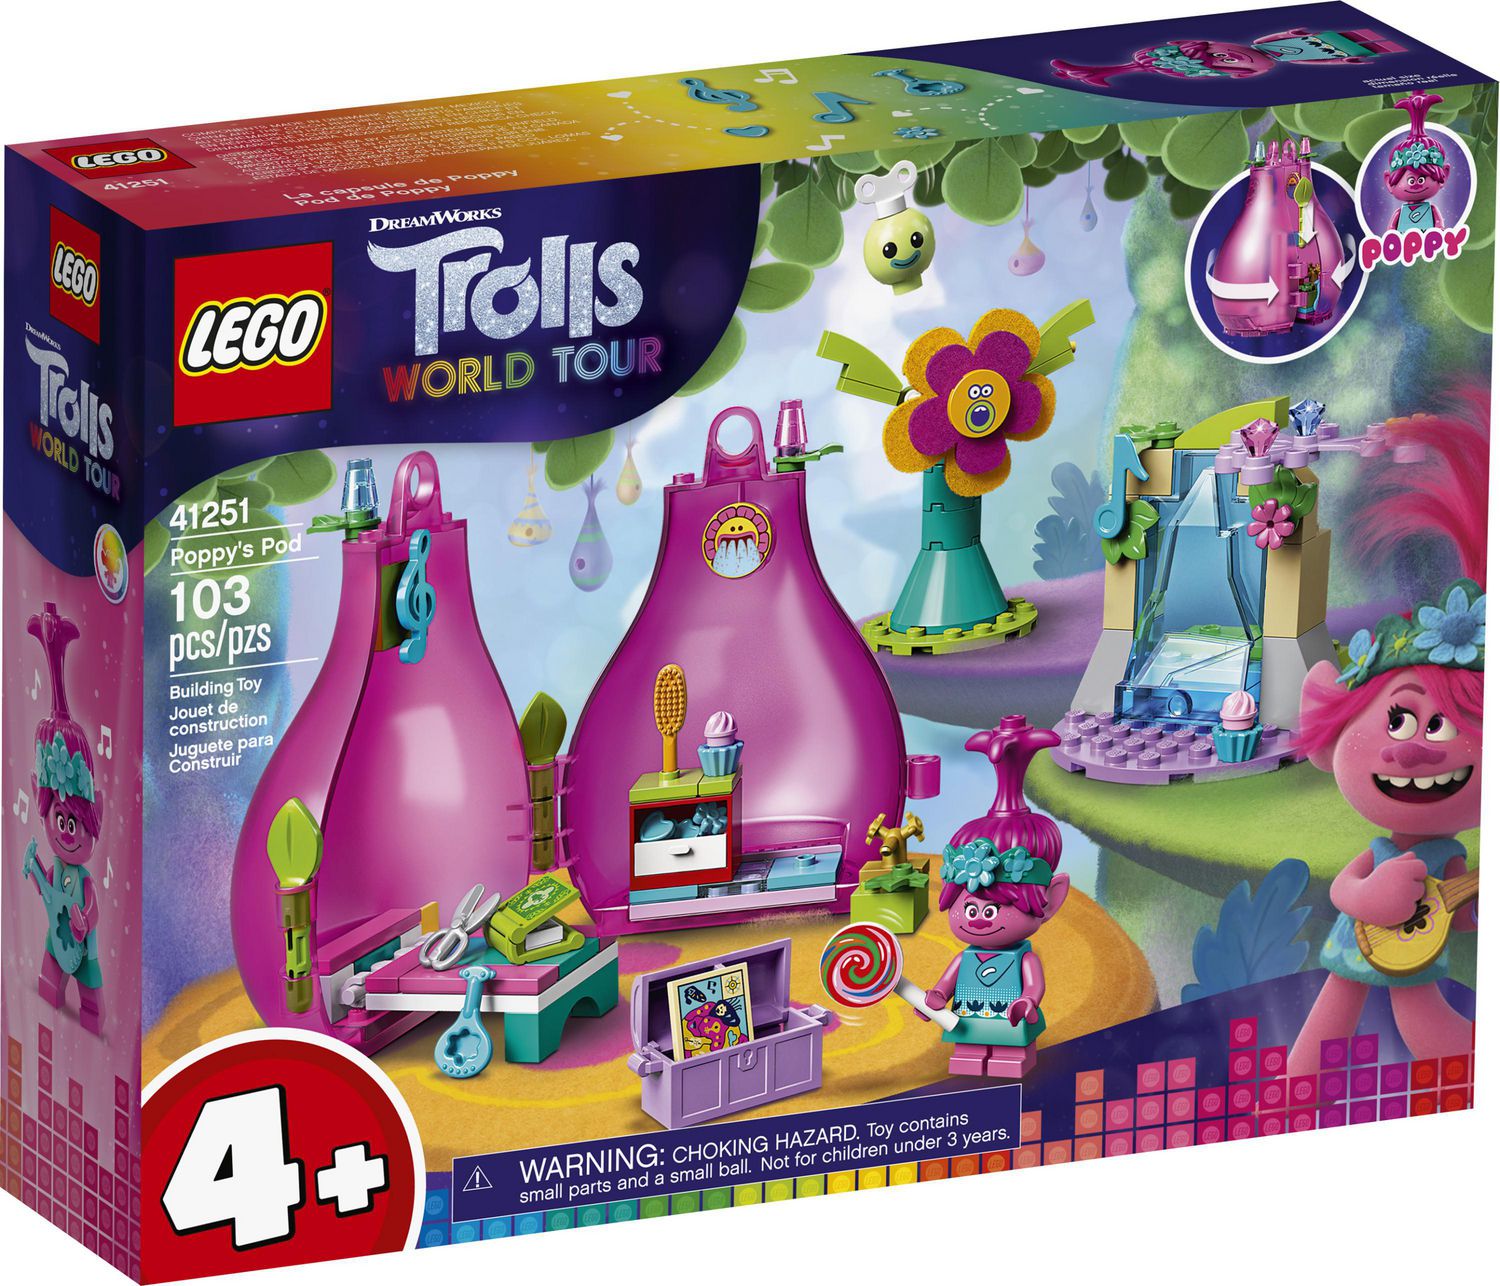 LEGO Trolls World Tour Poppy's Pod 41251 Toy Building Kit (103